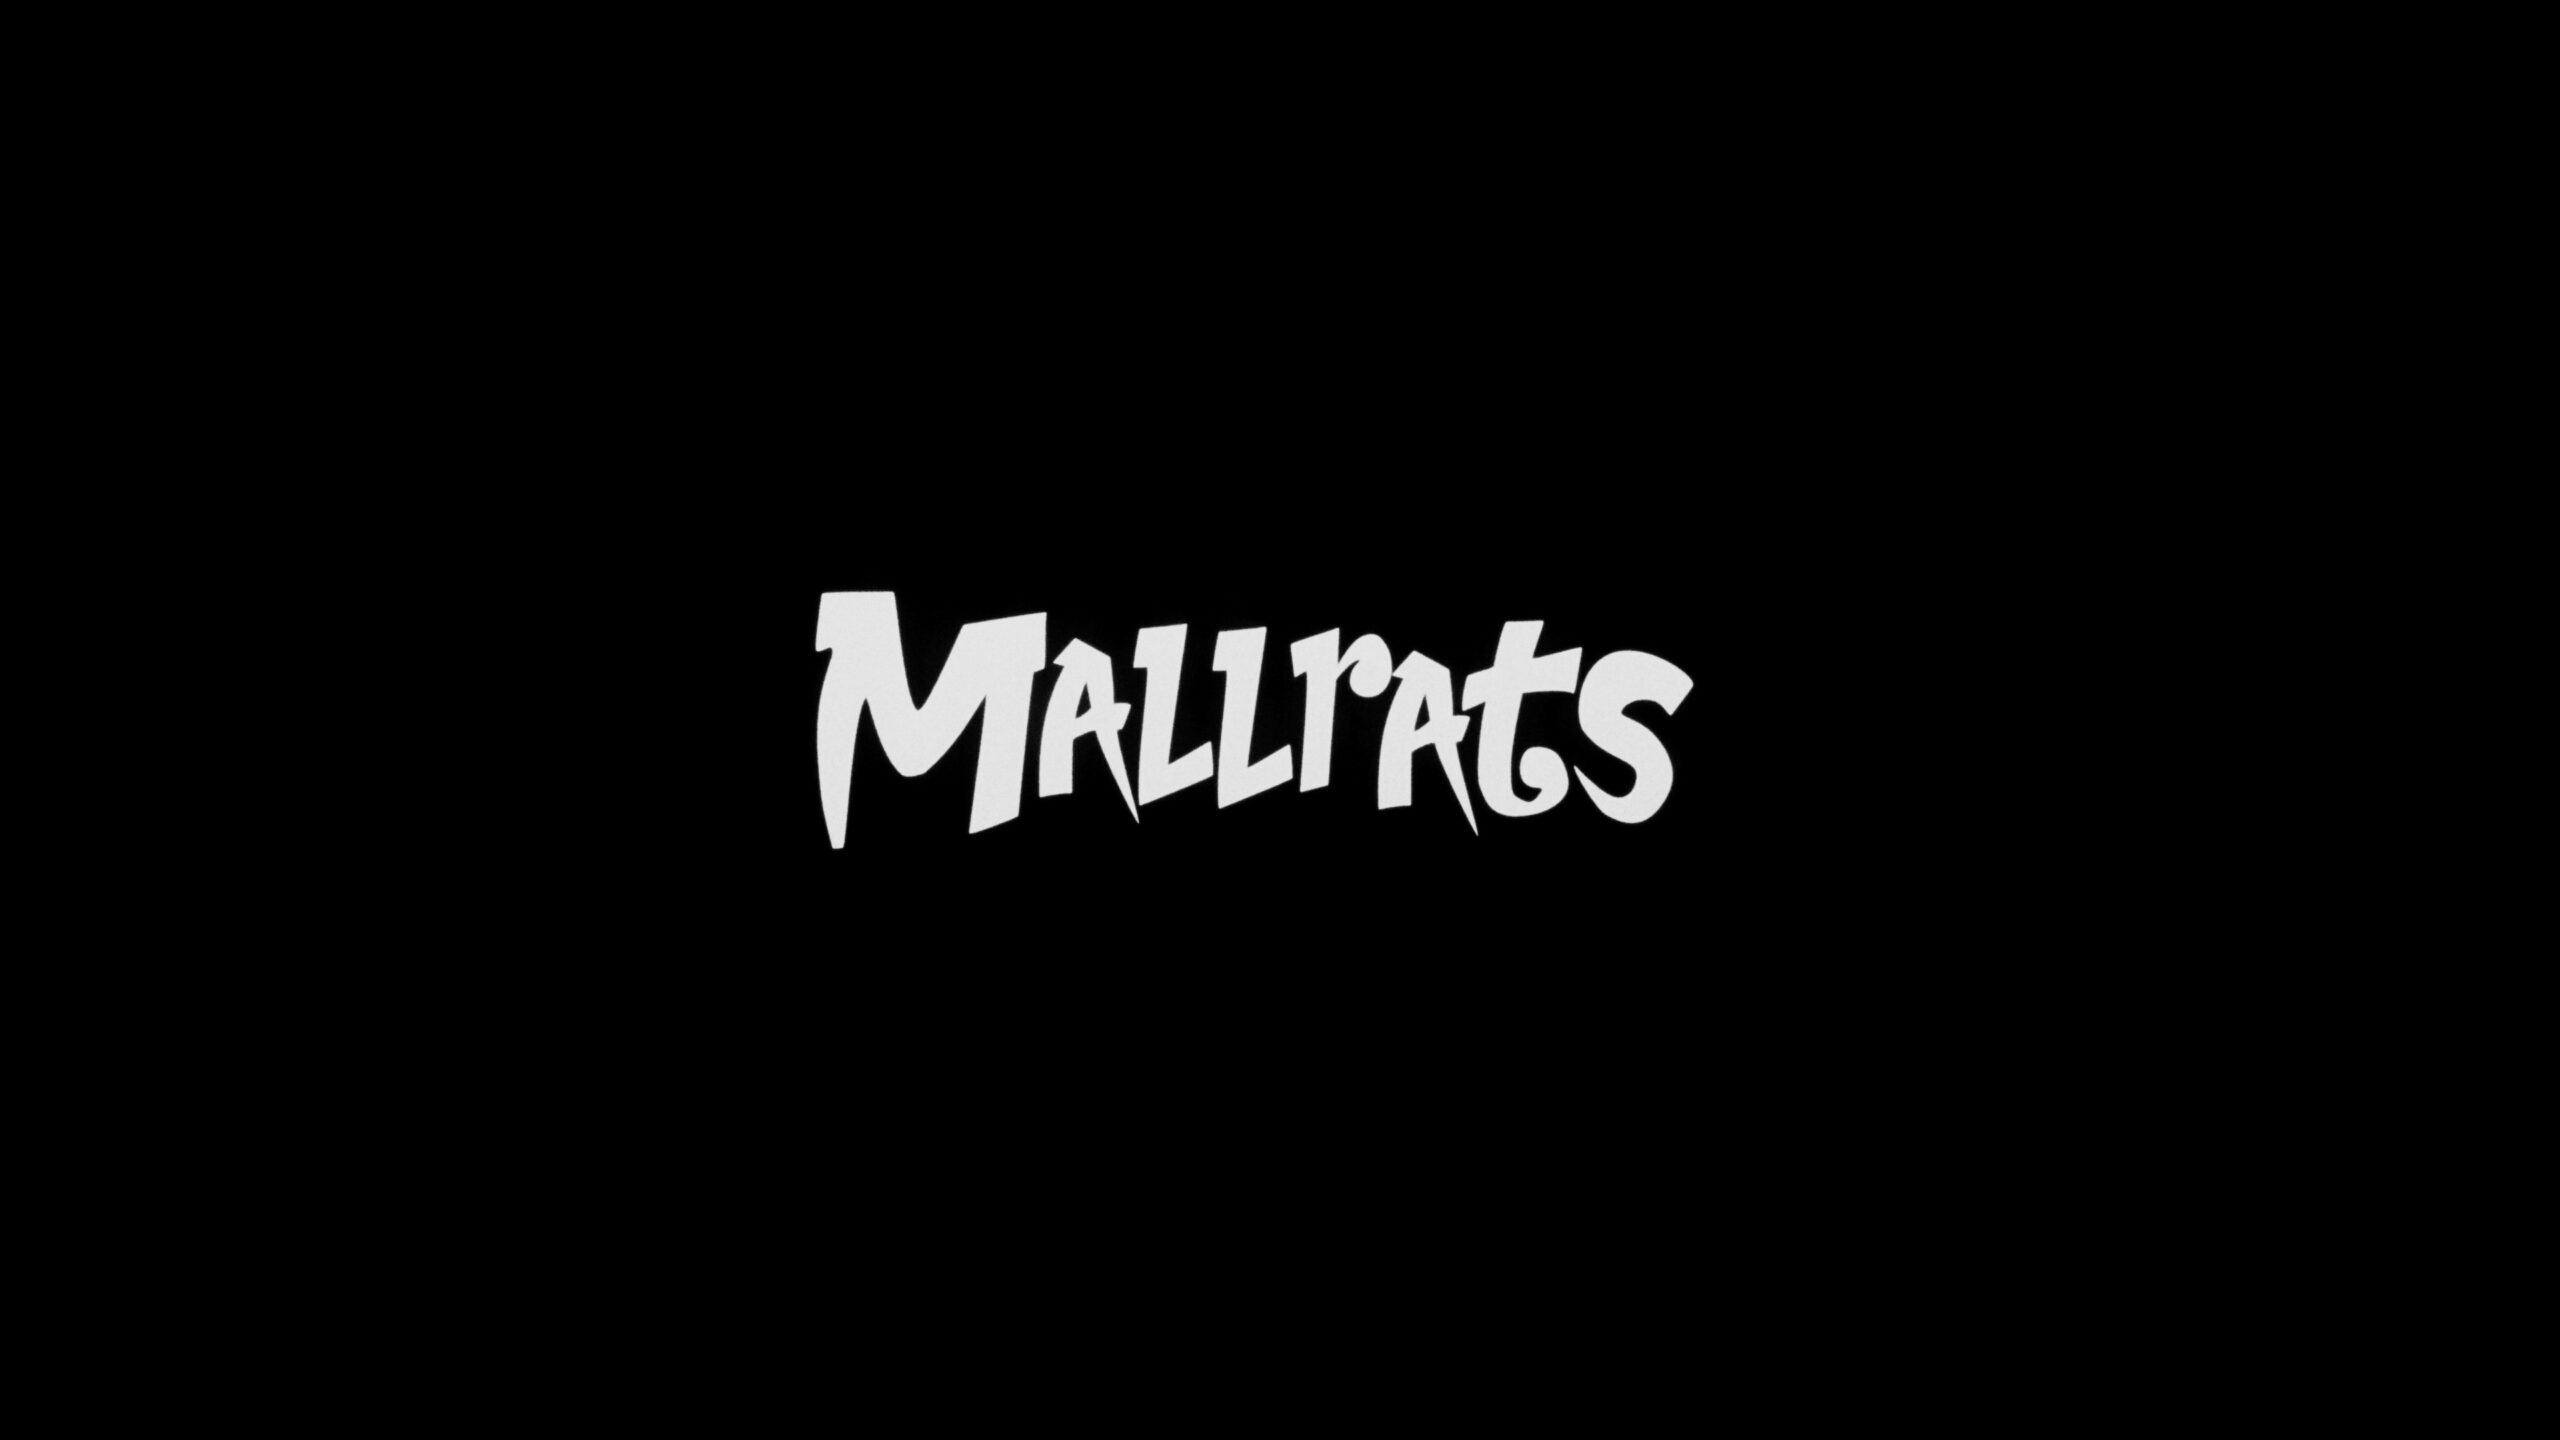 Mallrats (1995) [Arrow 4K UHD review] 23